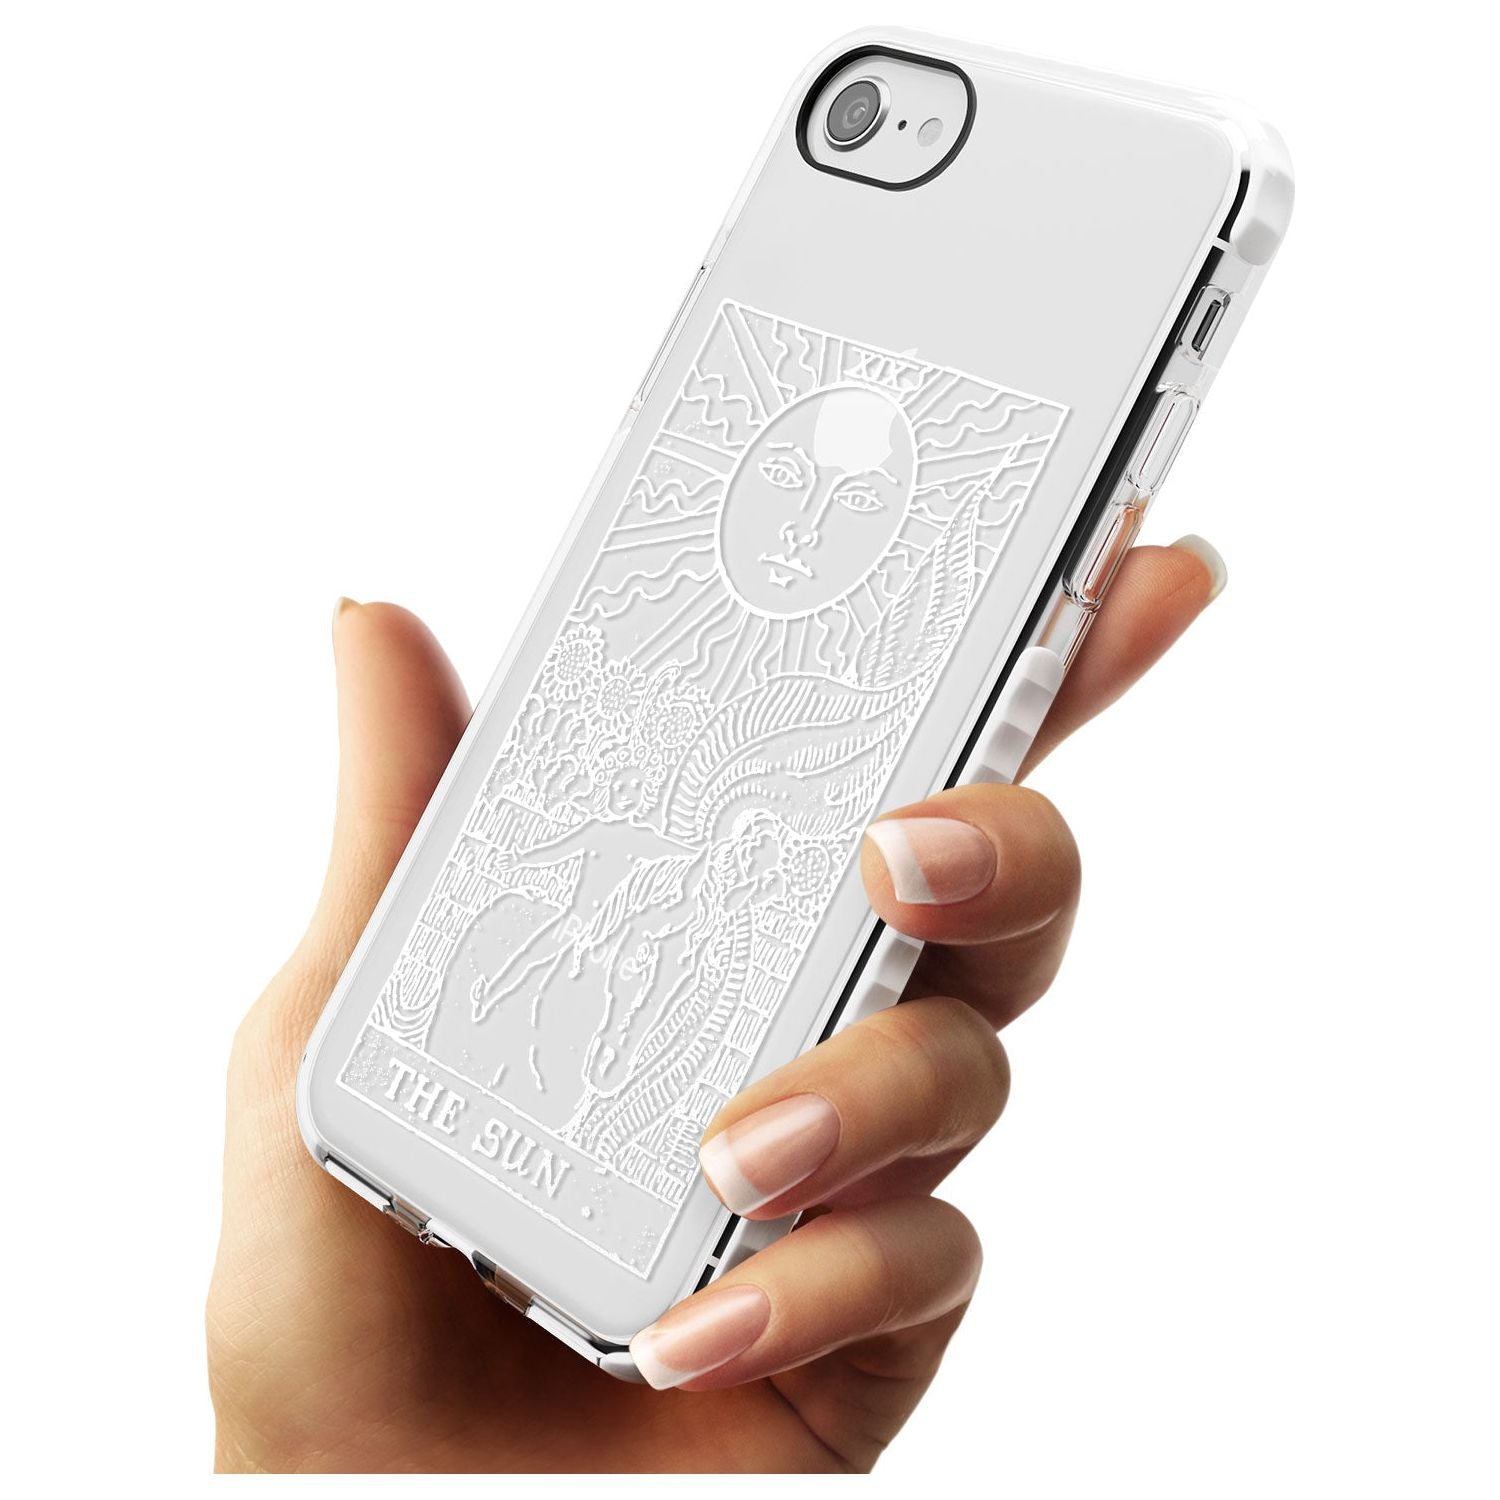 The Sun Tarot Card - White Transparent Slim TPU Phone Case for iPhone SE 8 7 Plus